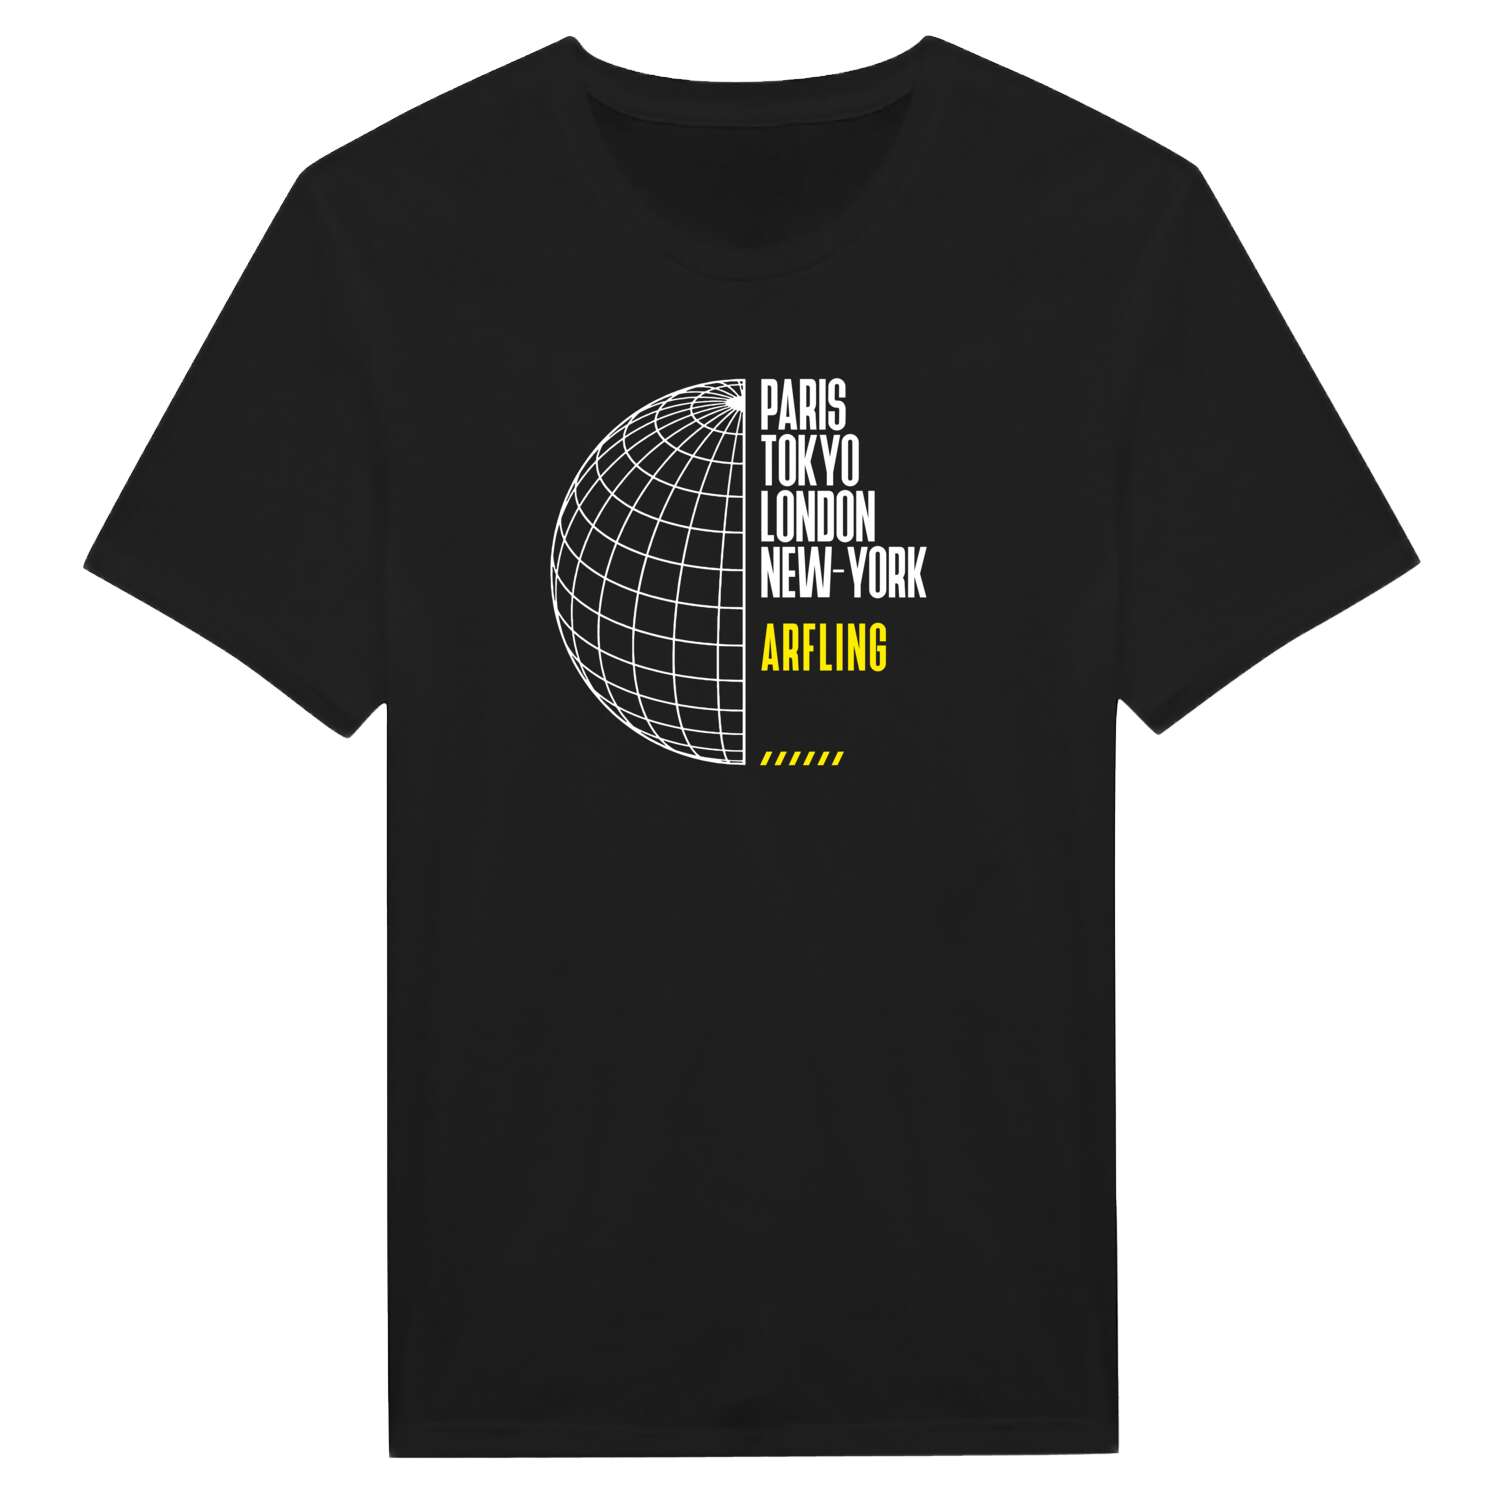 Arfling T-Shirt »Paris Tokyo London«